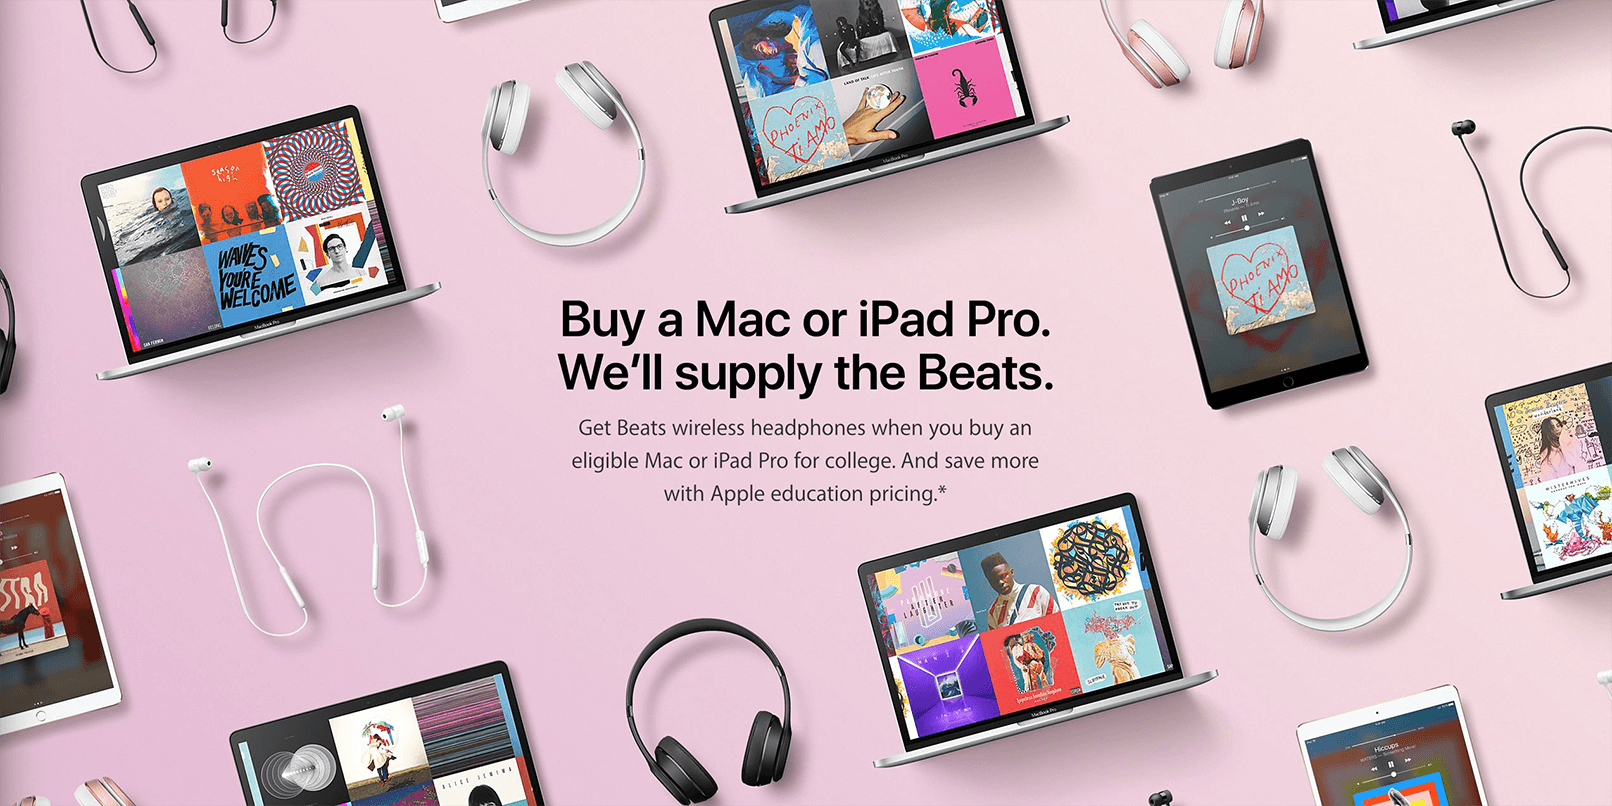 terminoloji etkilenmek pürüzsüz  Apple's giving away free Beats headphones on Mac or iPad purchases (and not  just for students)